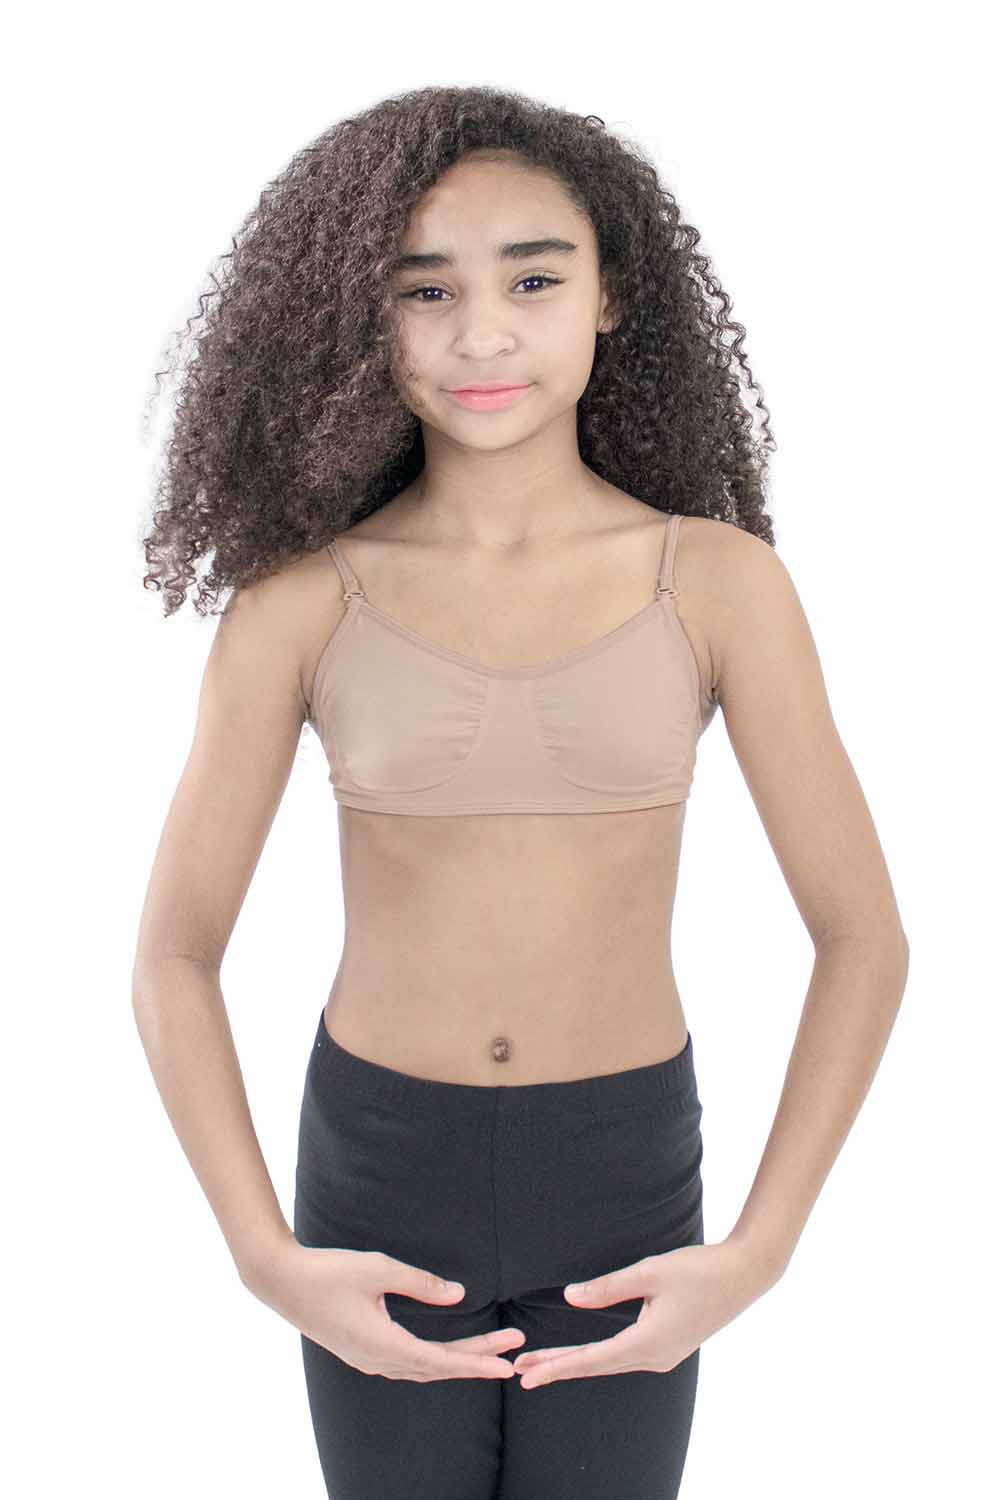 baby bra for teens girl baby bra for 10 12 years old Children 39;s